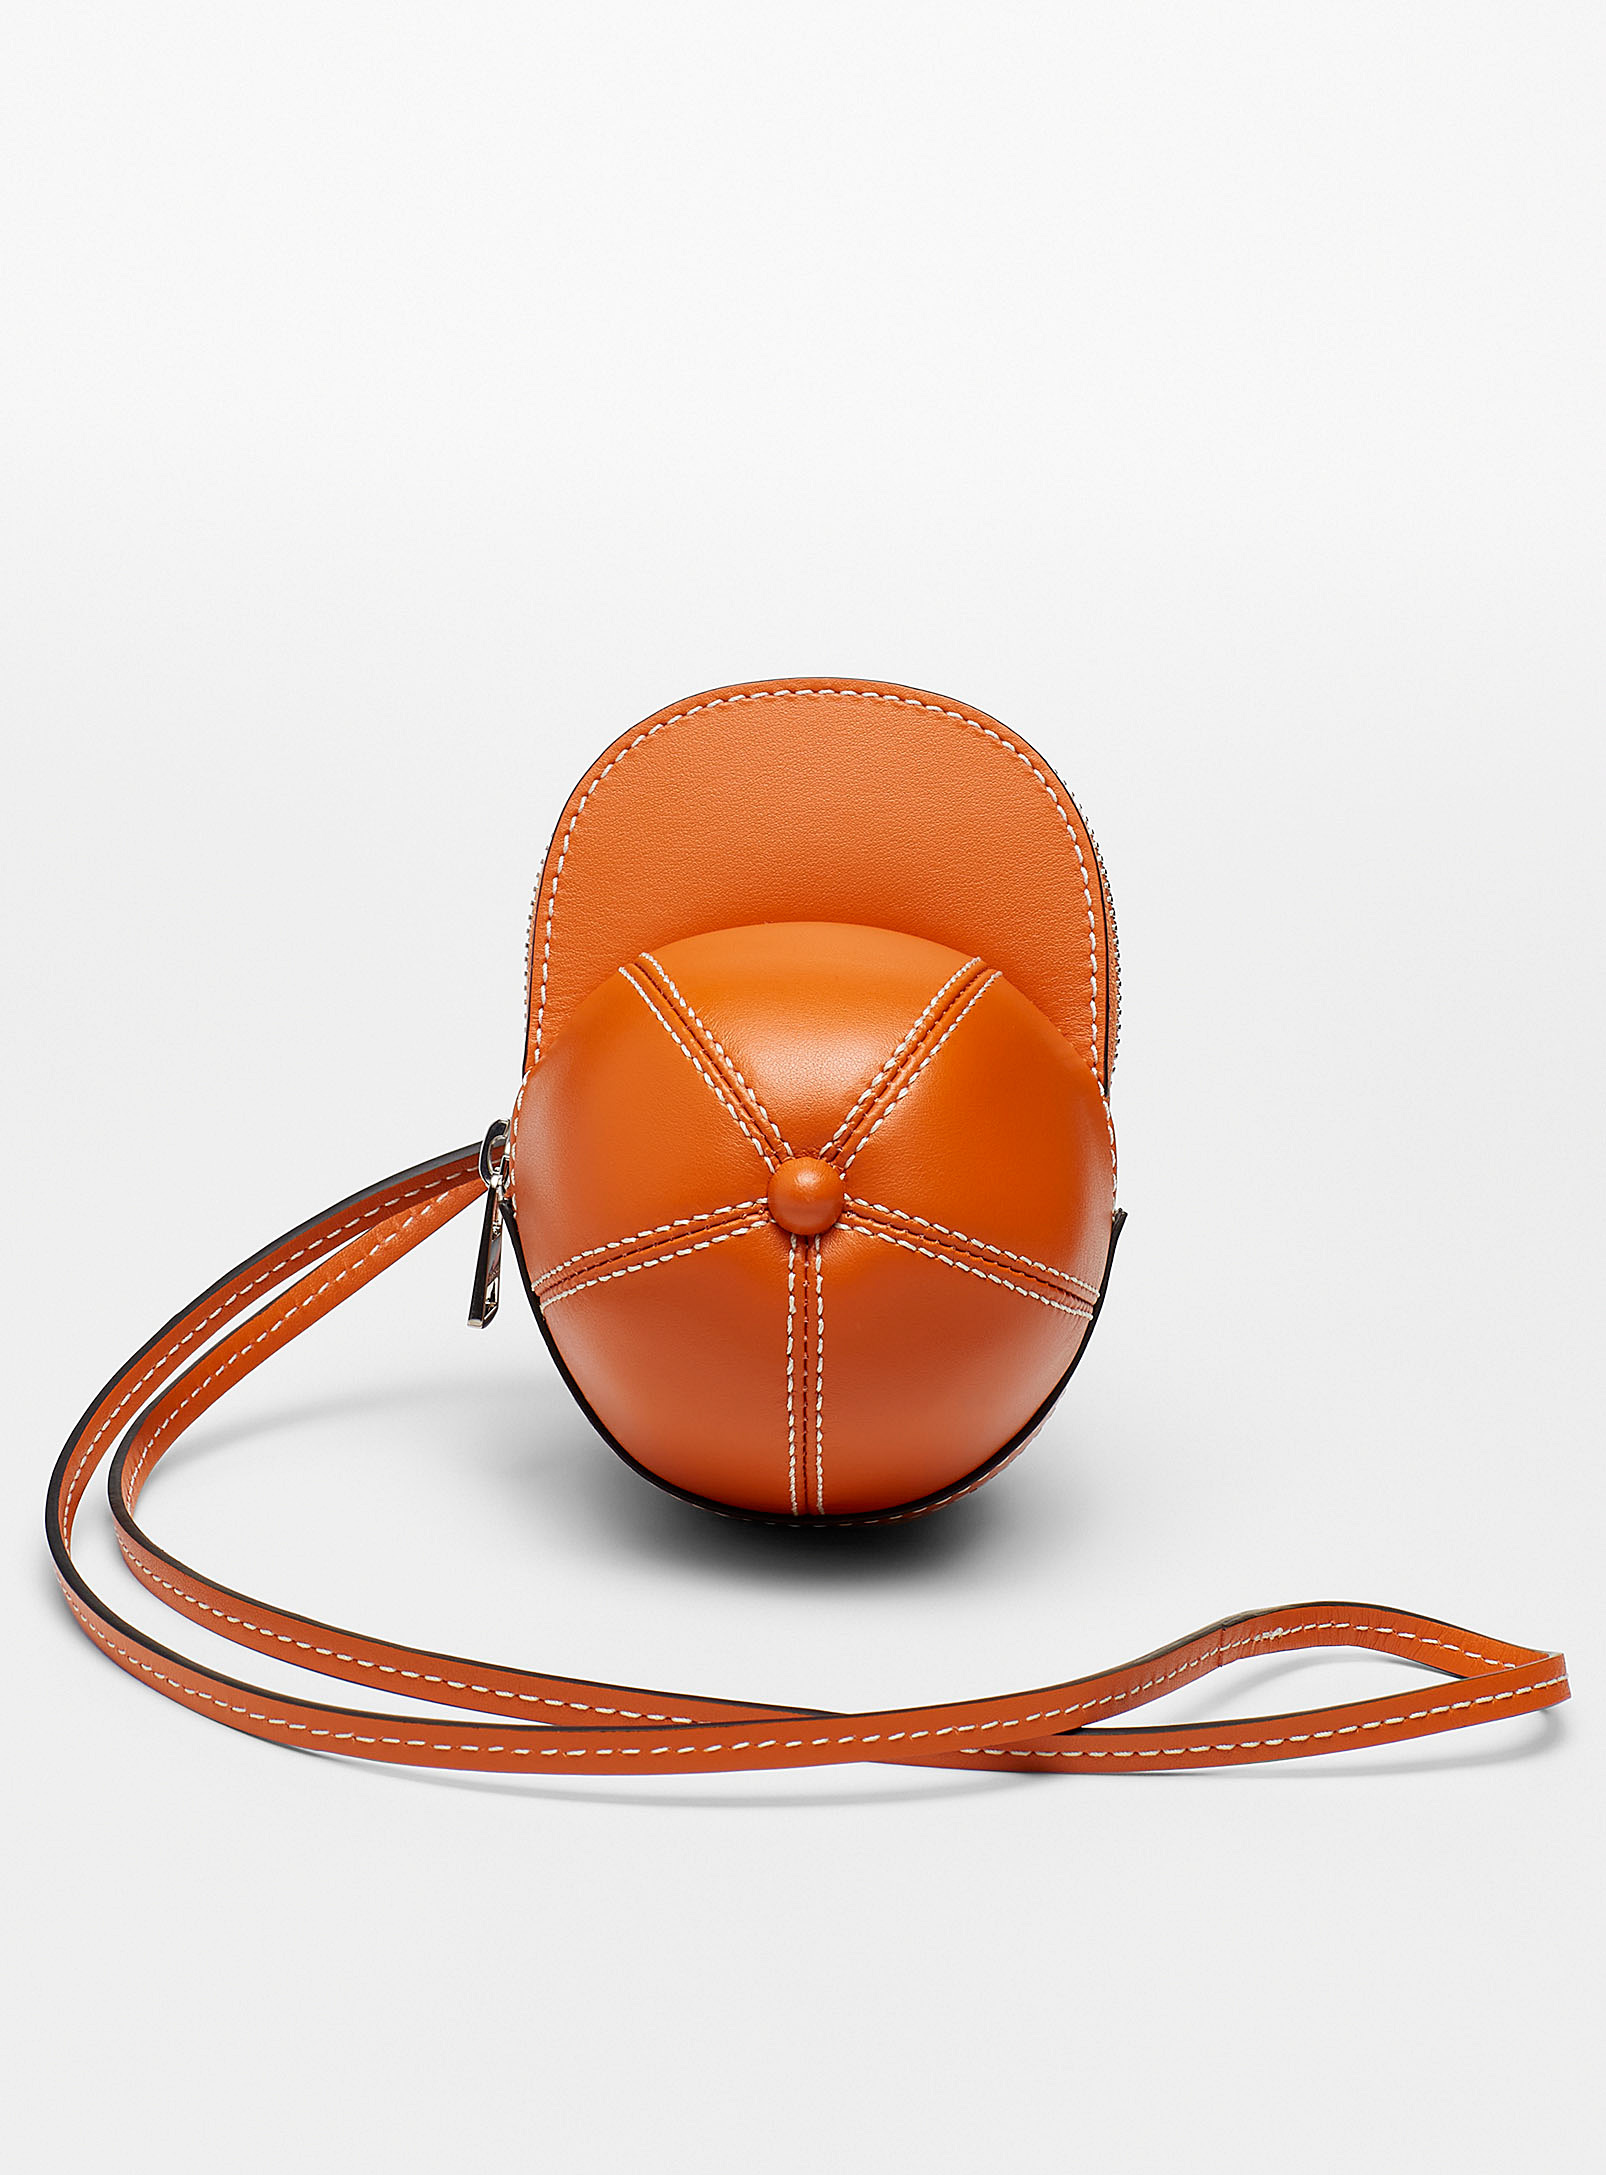 Jw Anderson The Nano Leather Cap Bag In Cream Beige